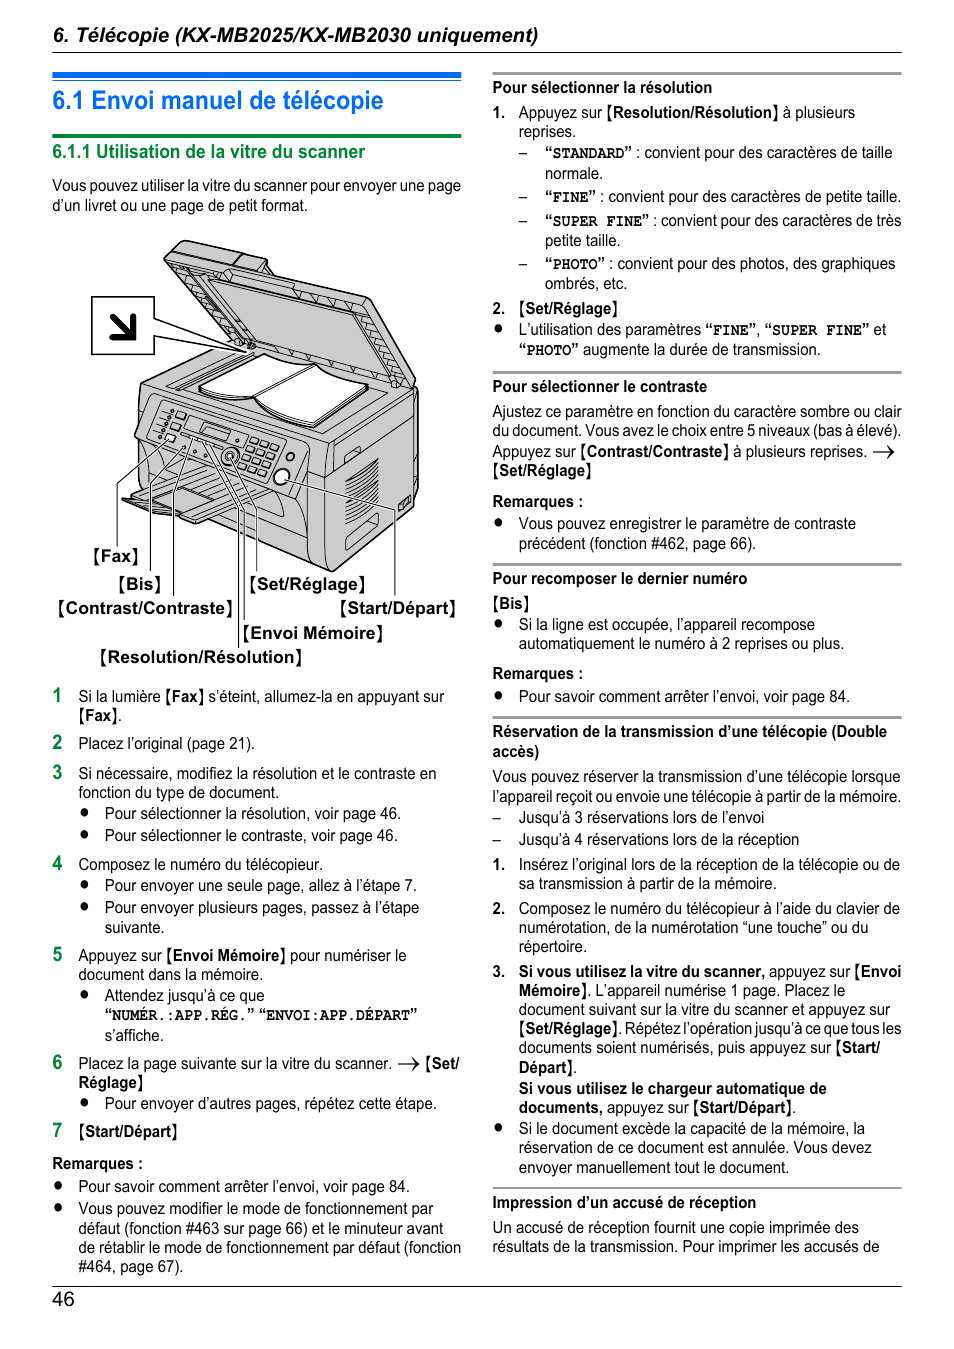 fax panasonic kx mb2030